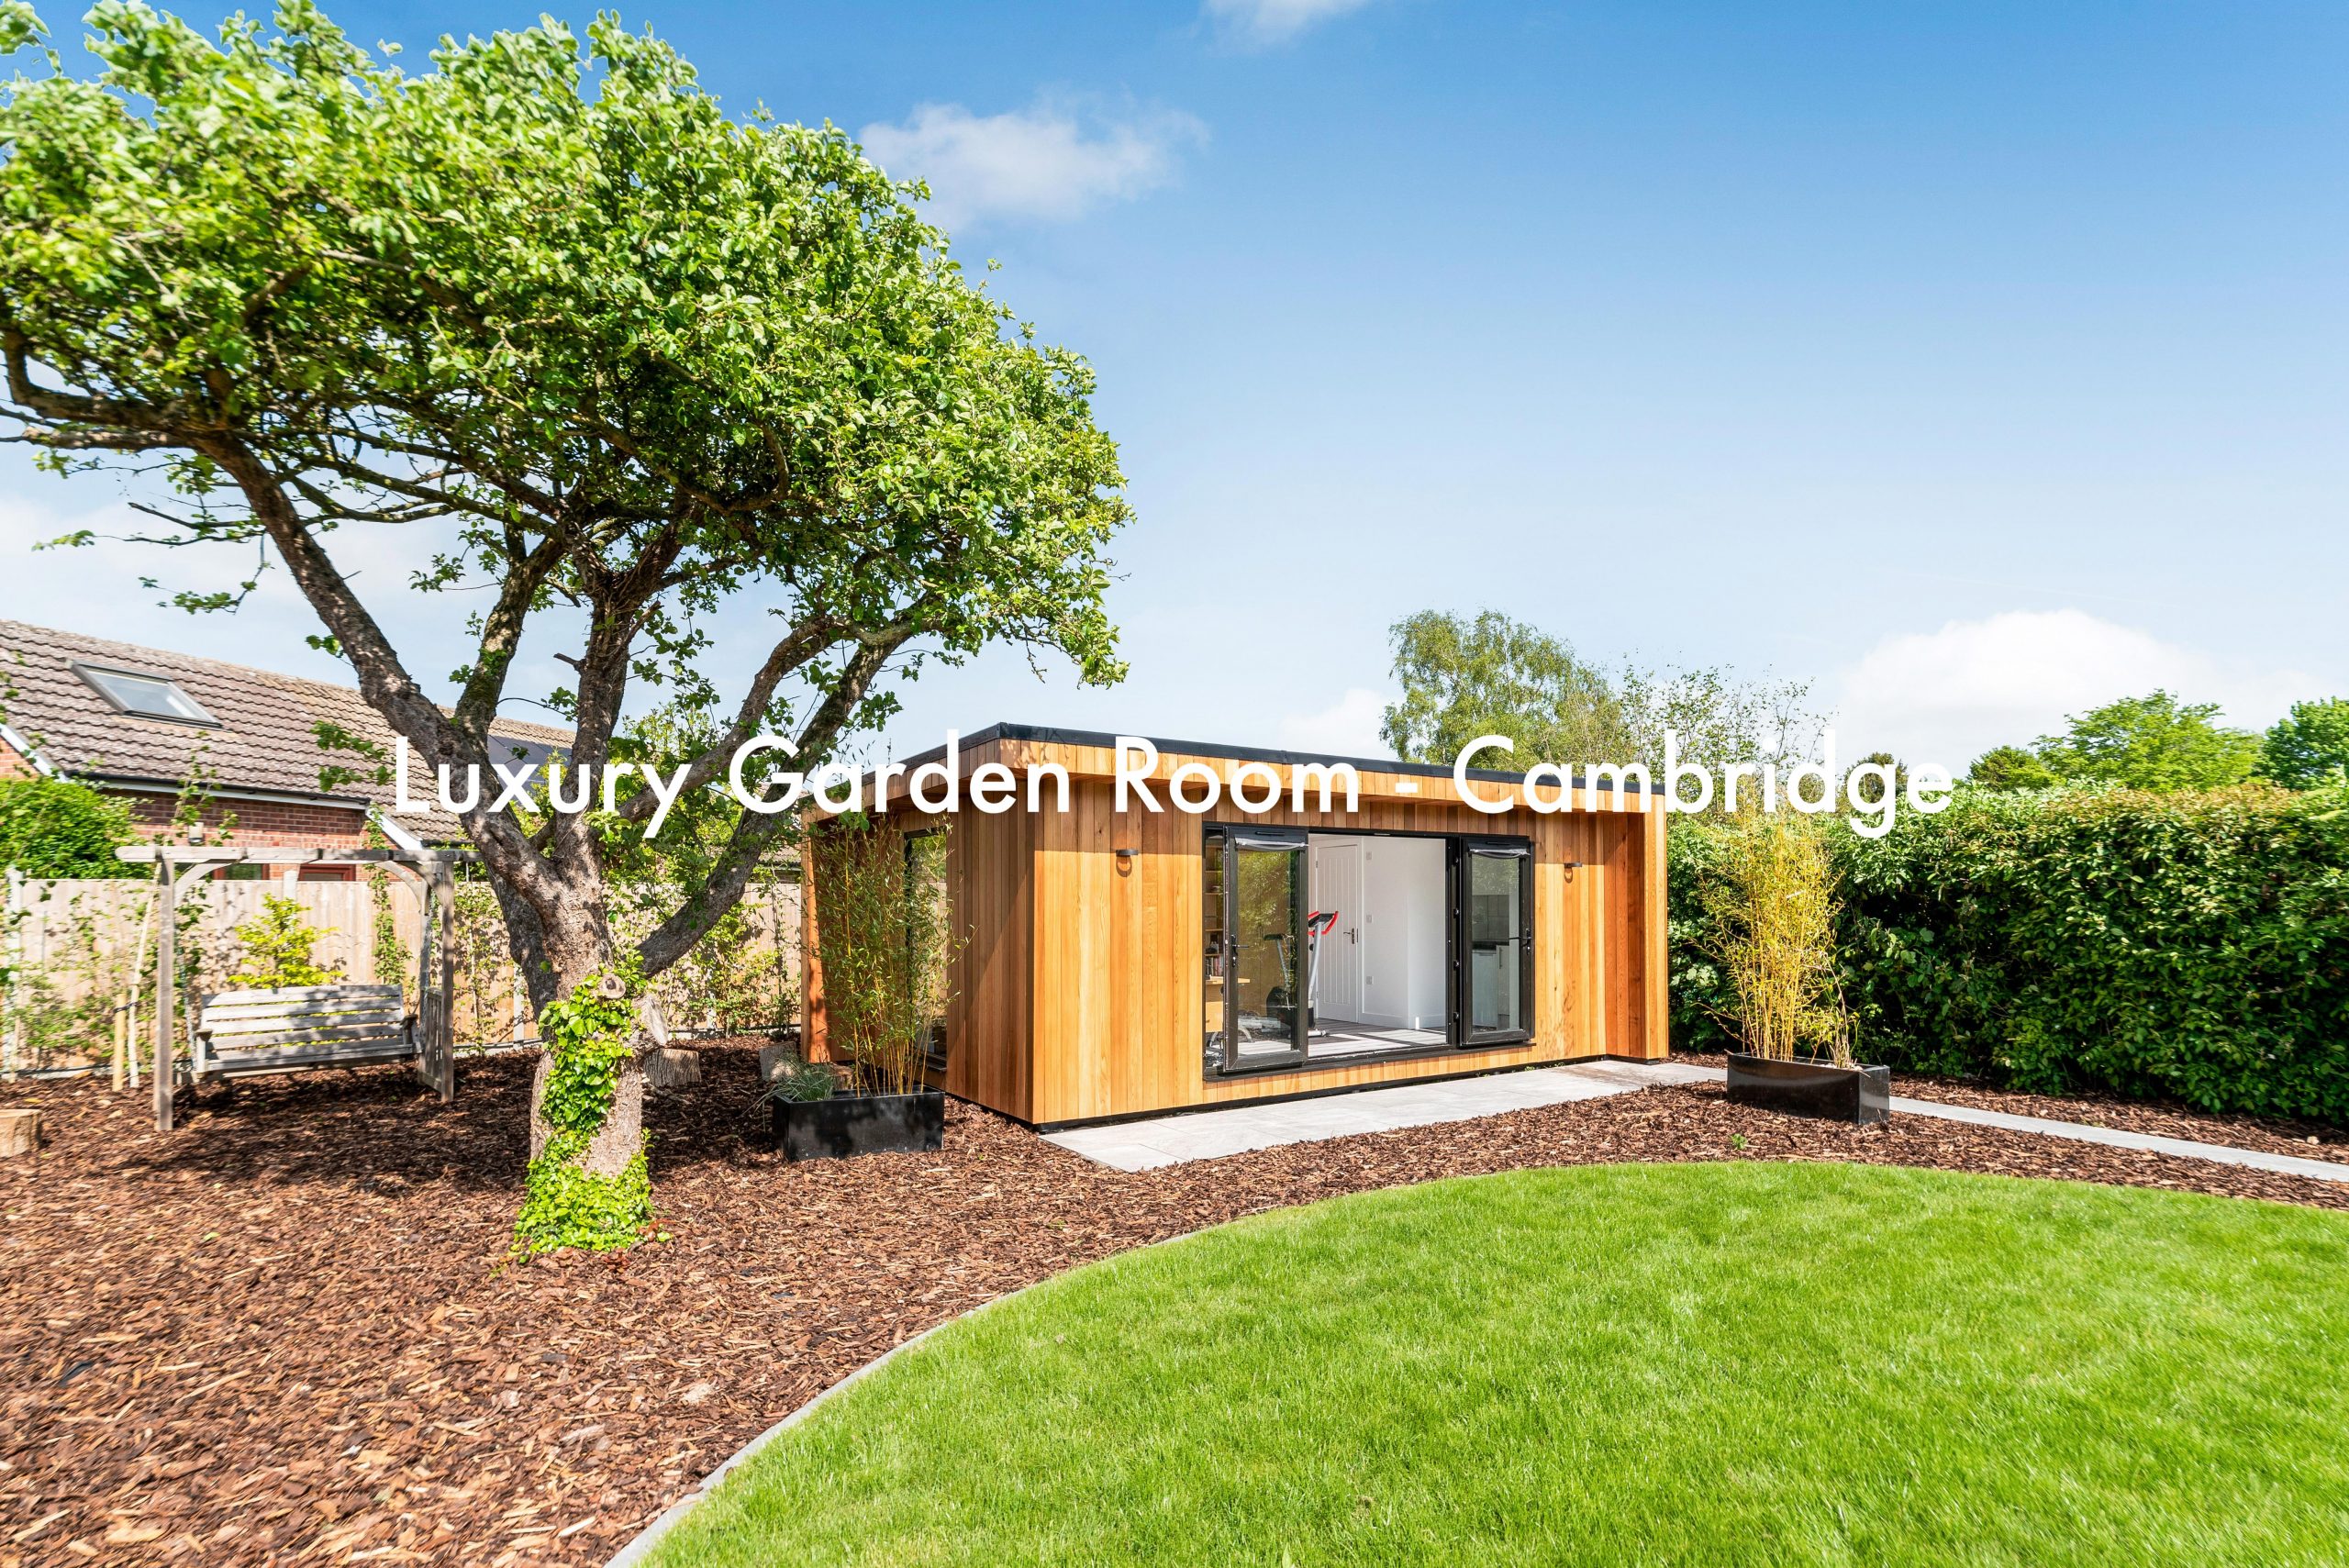 Luxury Garden Room Cambridge